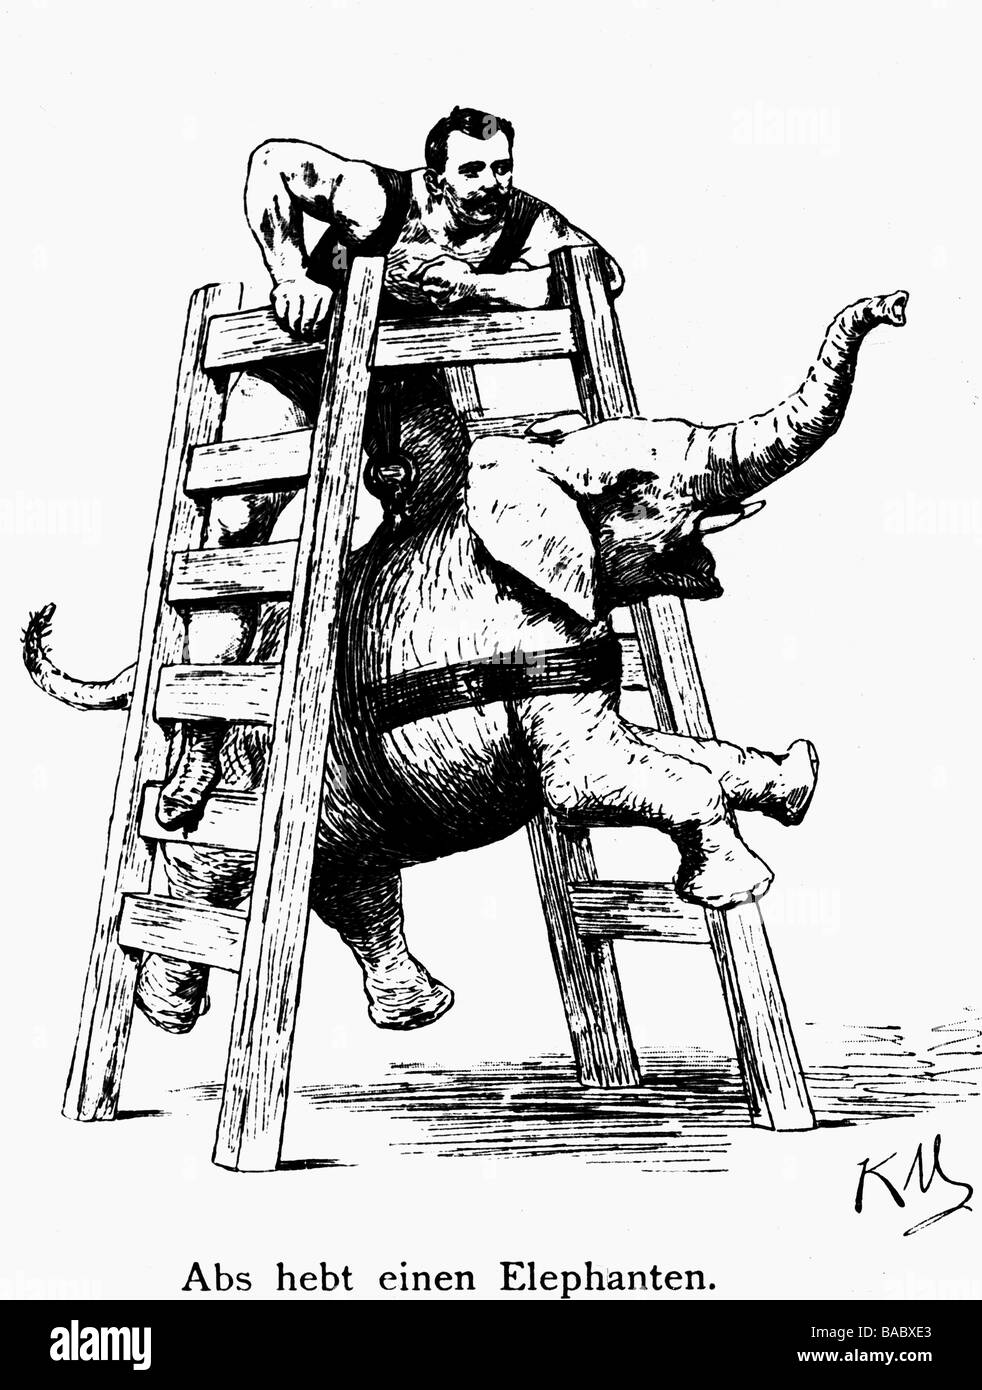 ABS, Carl, 17.9.1851 - 13.2.1895, atleta tedesco, noto come 'quercia tedesca', elefante lifting, incisione in legno, 19th secolo, Foto Stock